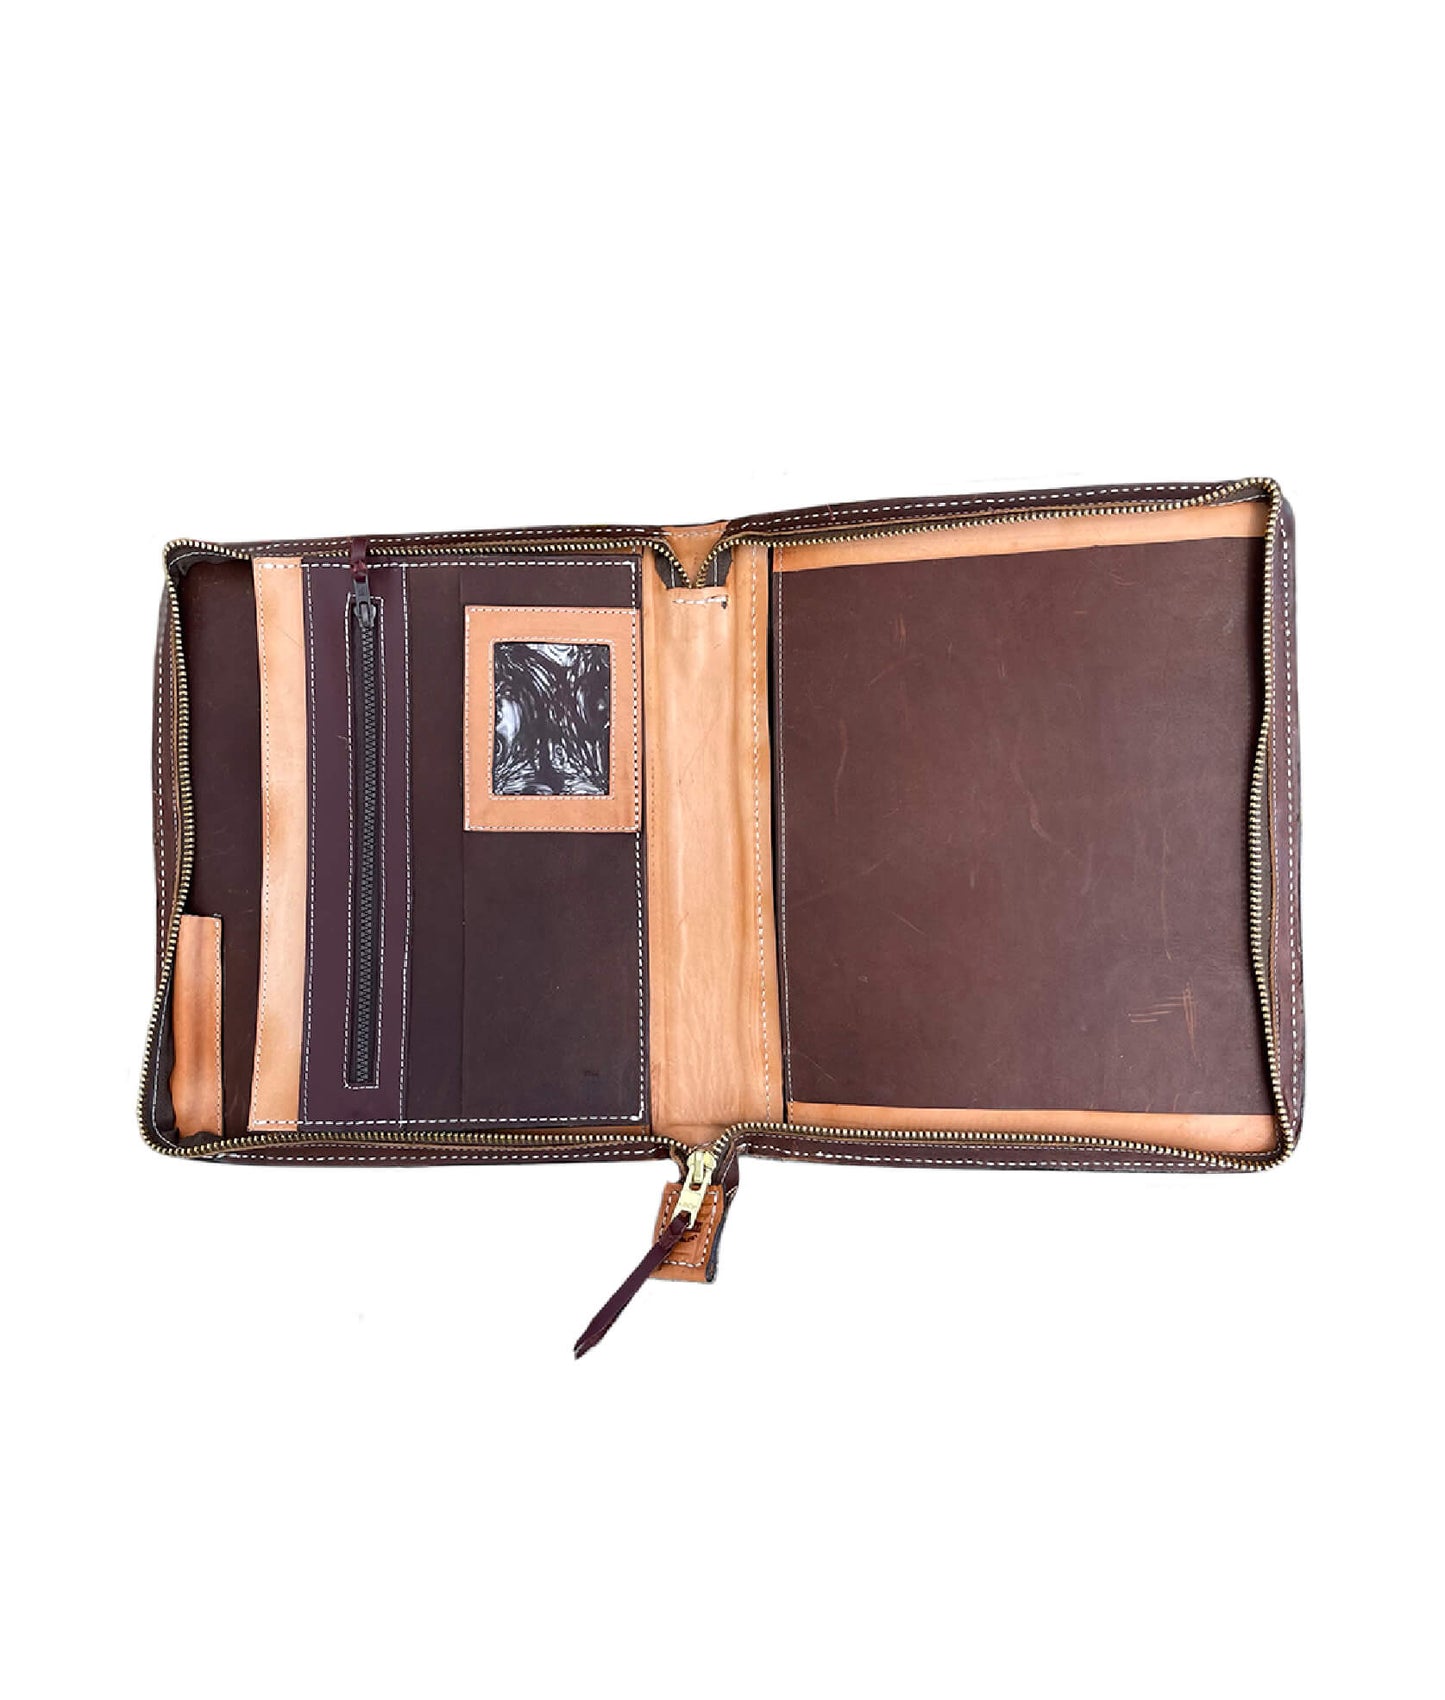 Cowboy Briefcase rough out golden leather